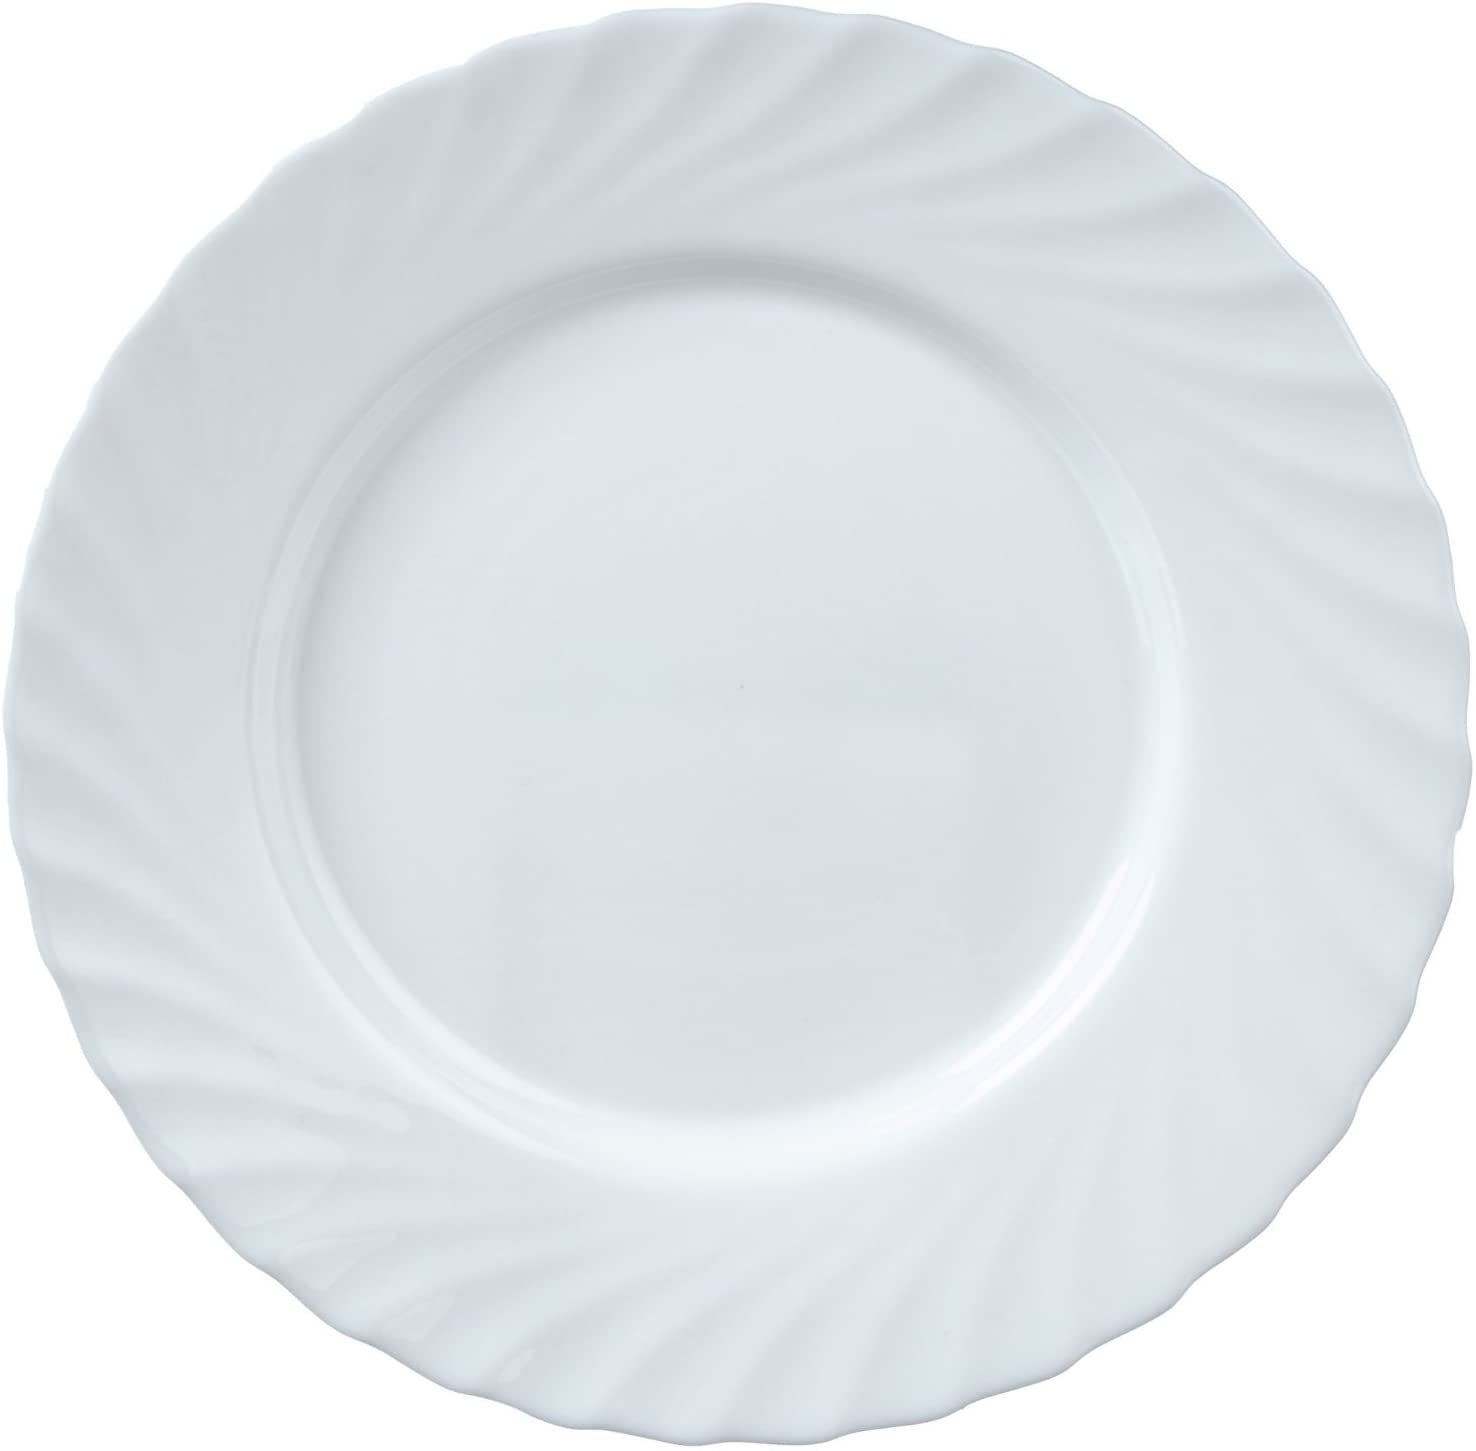 Arcoroc Plate 31 CM Trianon Plain, Set of 4, white opaline glass, hardened